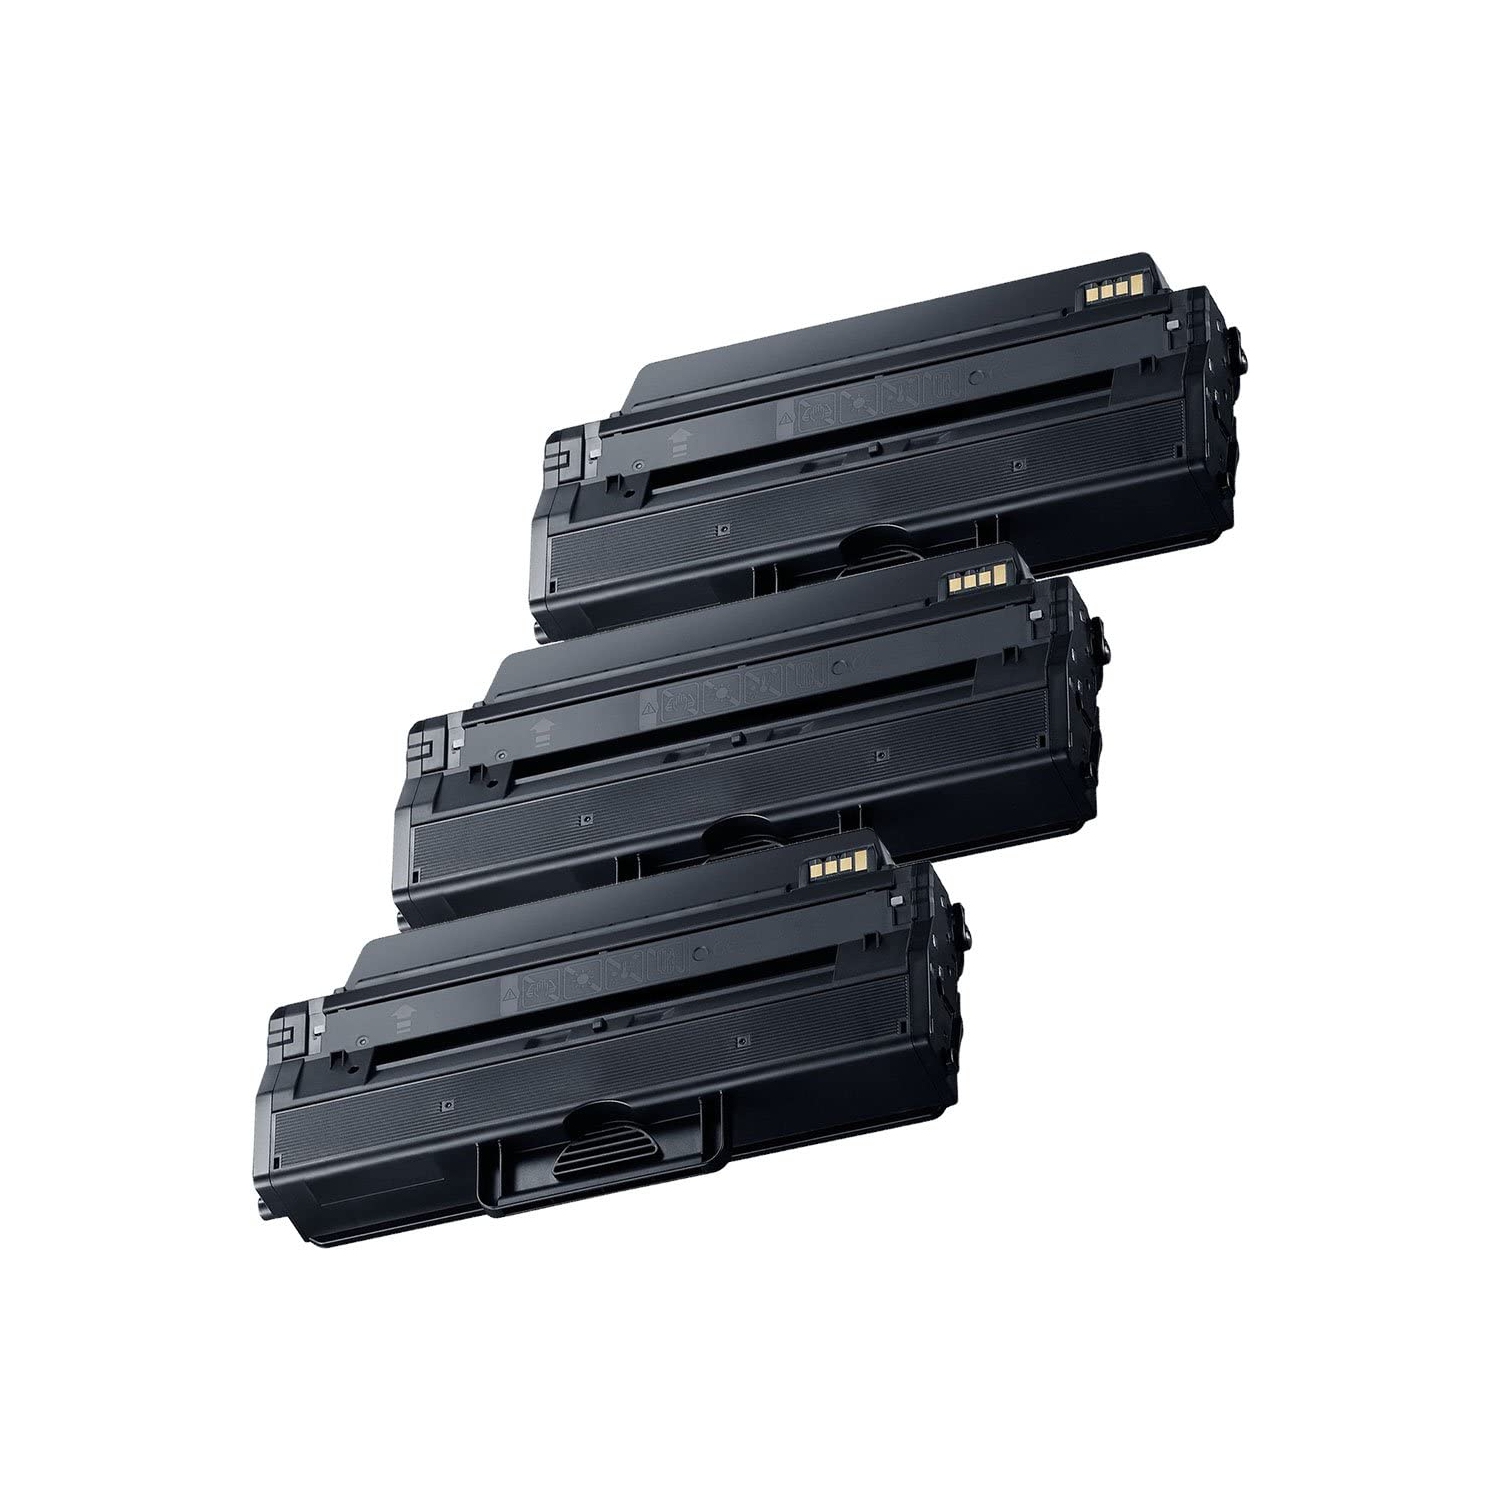 3 Inkfirst®Toner Cartridges D115L MLT-D115L Compatible Remanufactured for Samsung D115L Black Xpress SL-M2870 SL-M2880FW